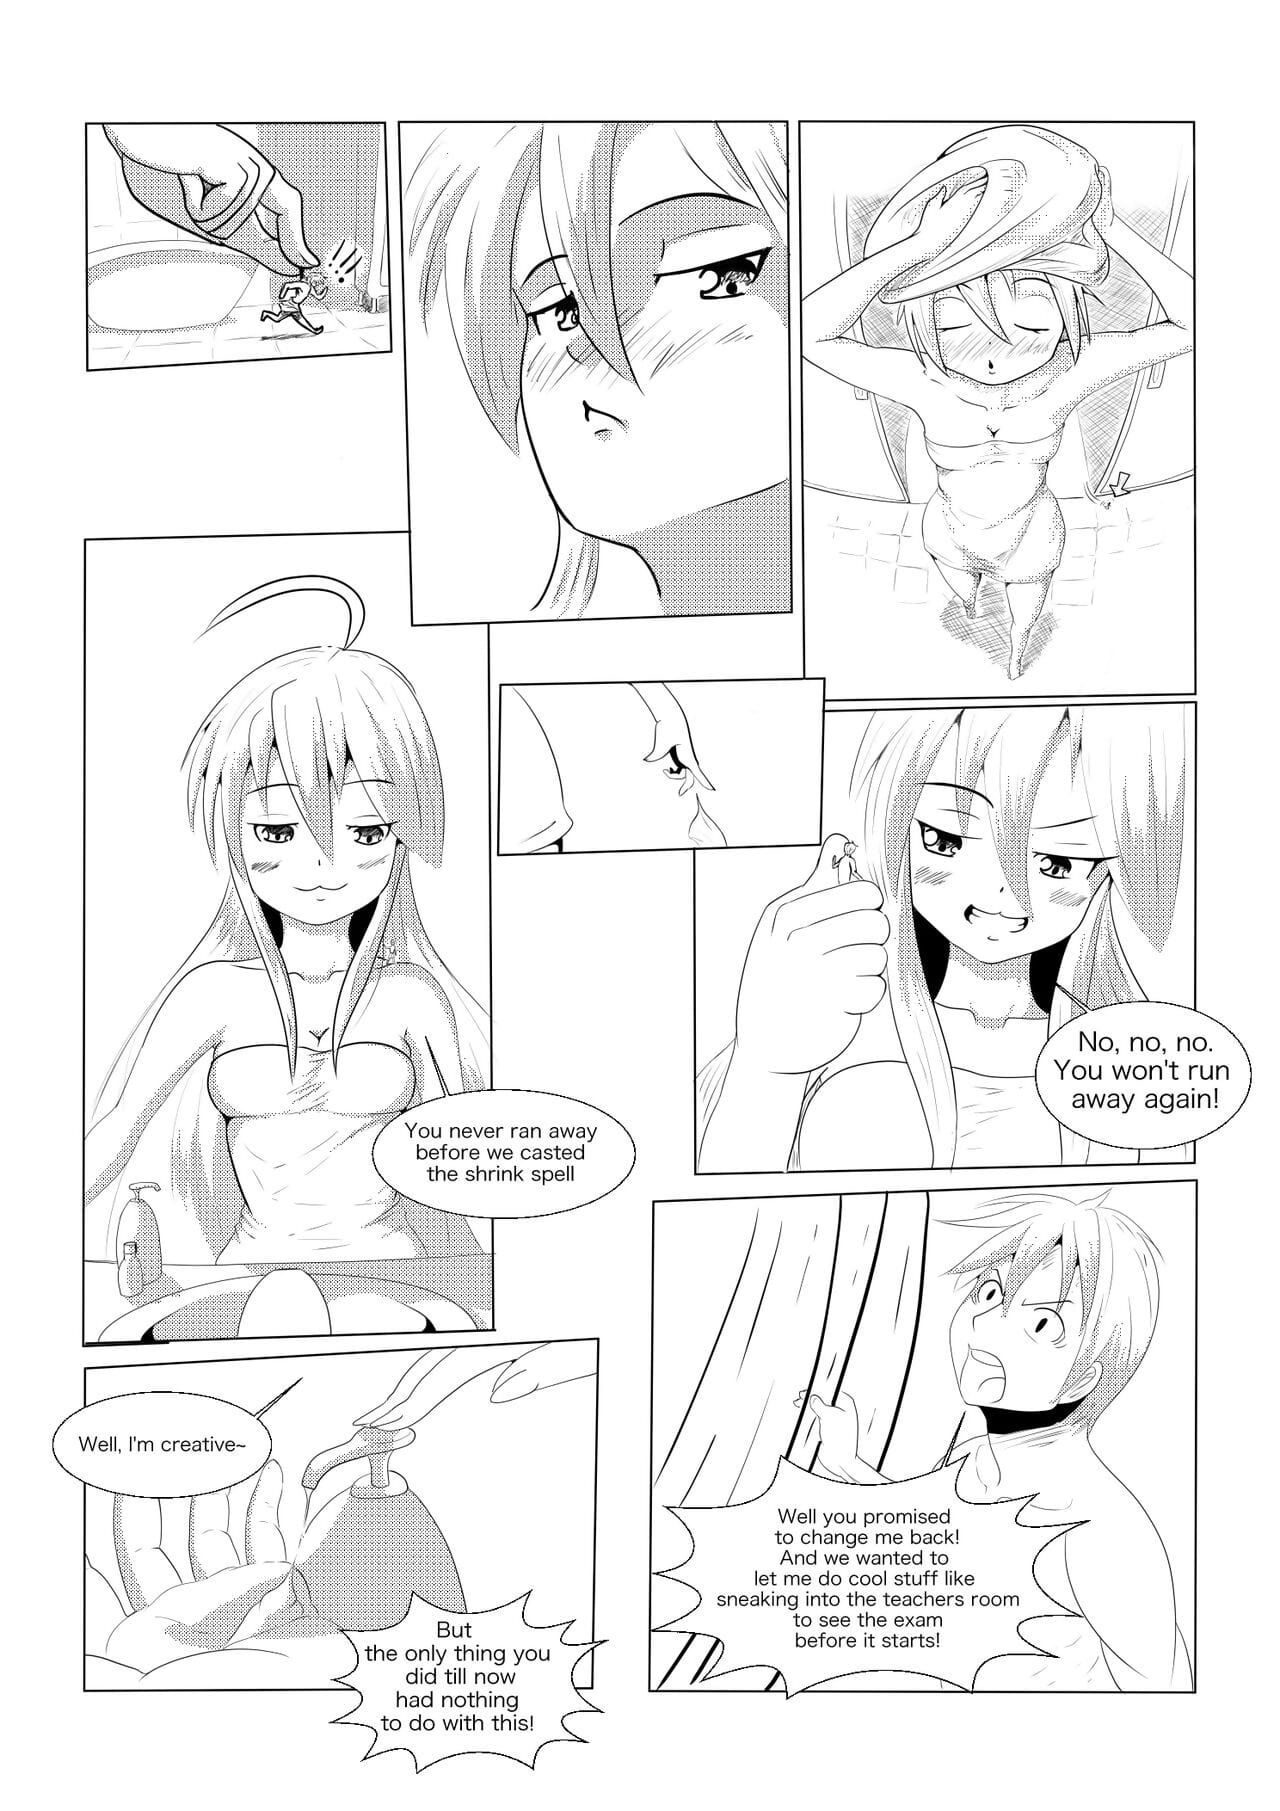 Konata AV Manga 2 page 1